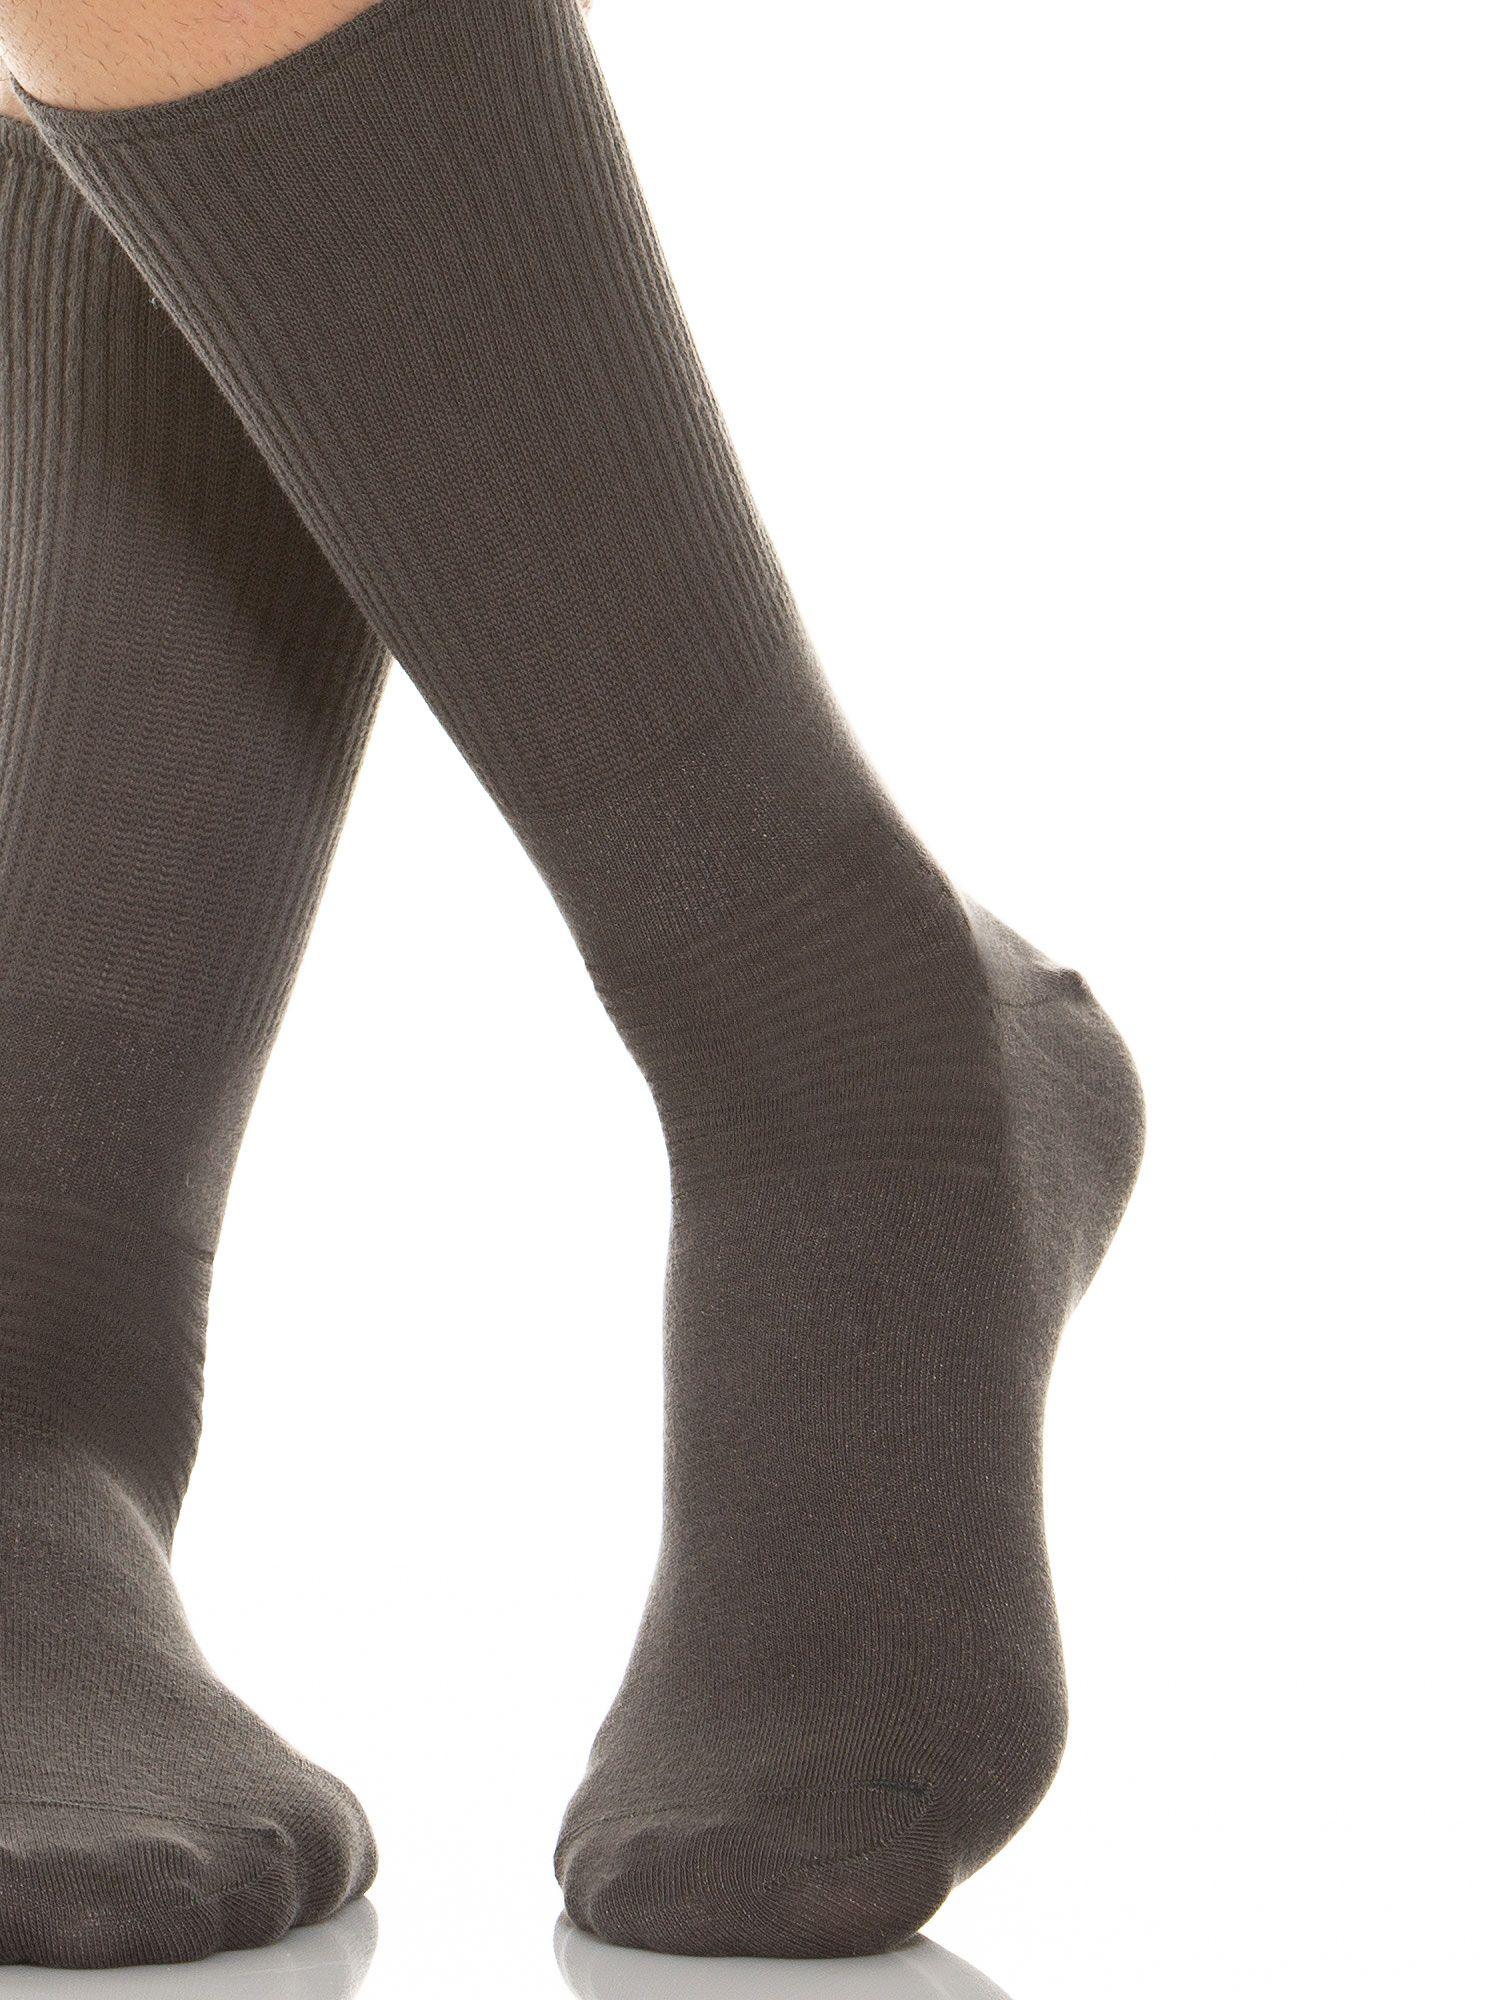 Buy Diabetic socks with Wellness – fibre Shoppee X-Static Silver